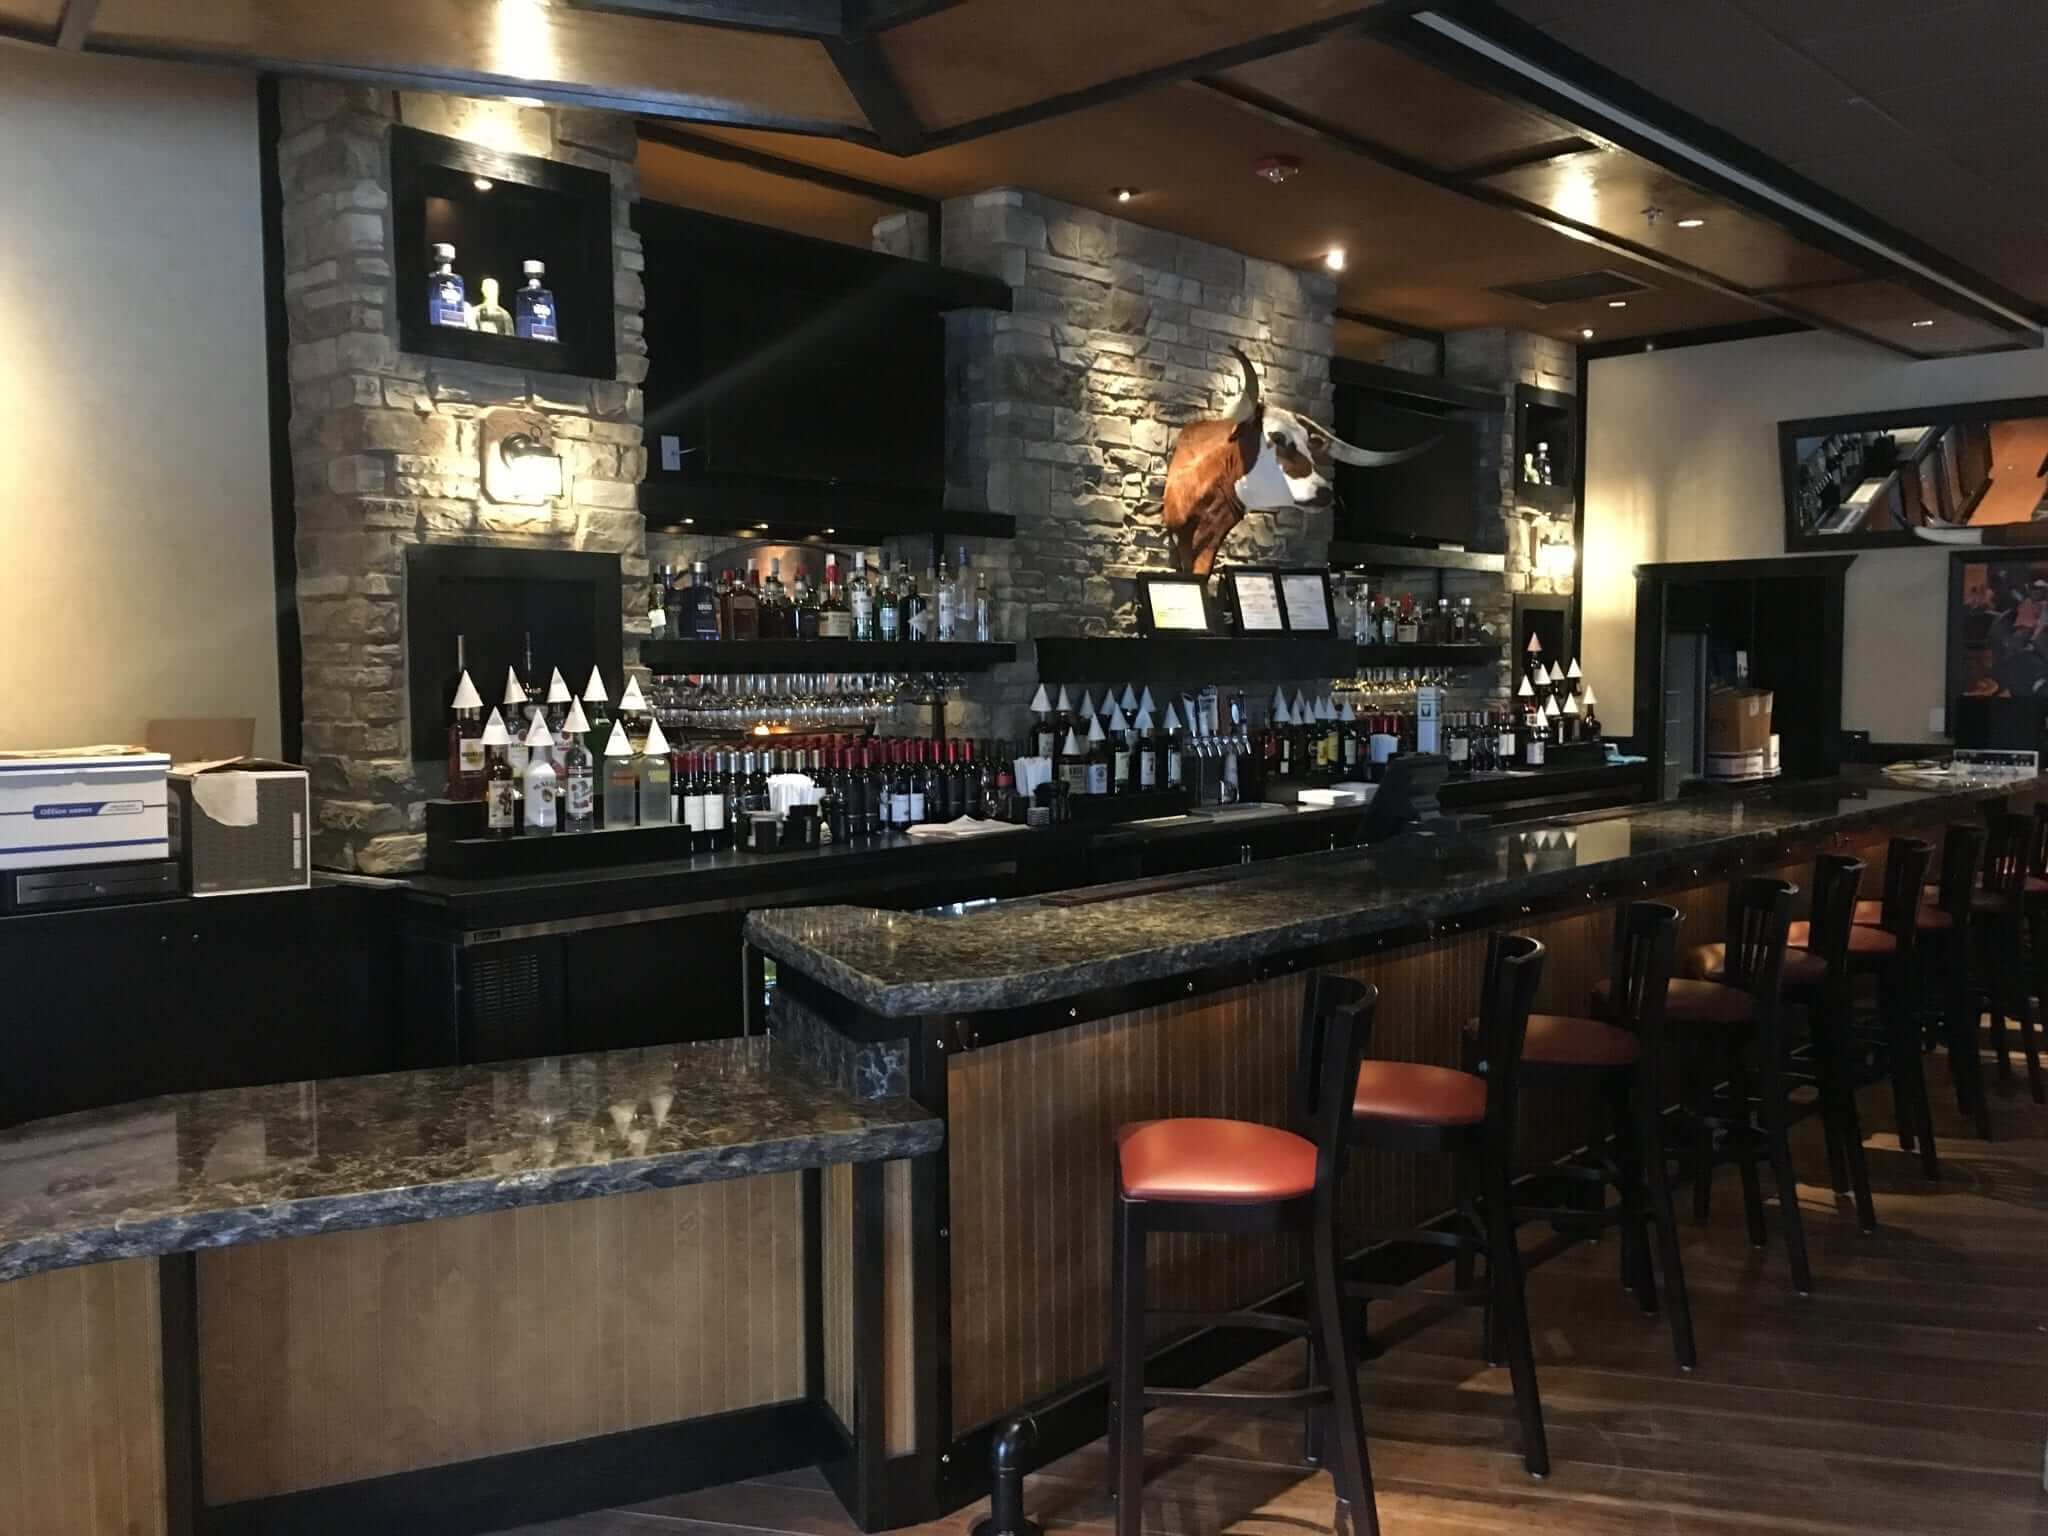 Longhorn Steakhouse | Daytona Beach, FL